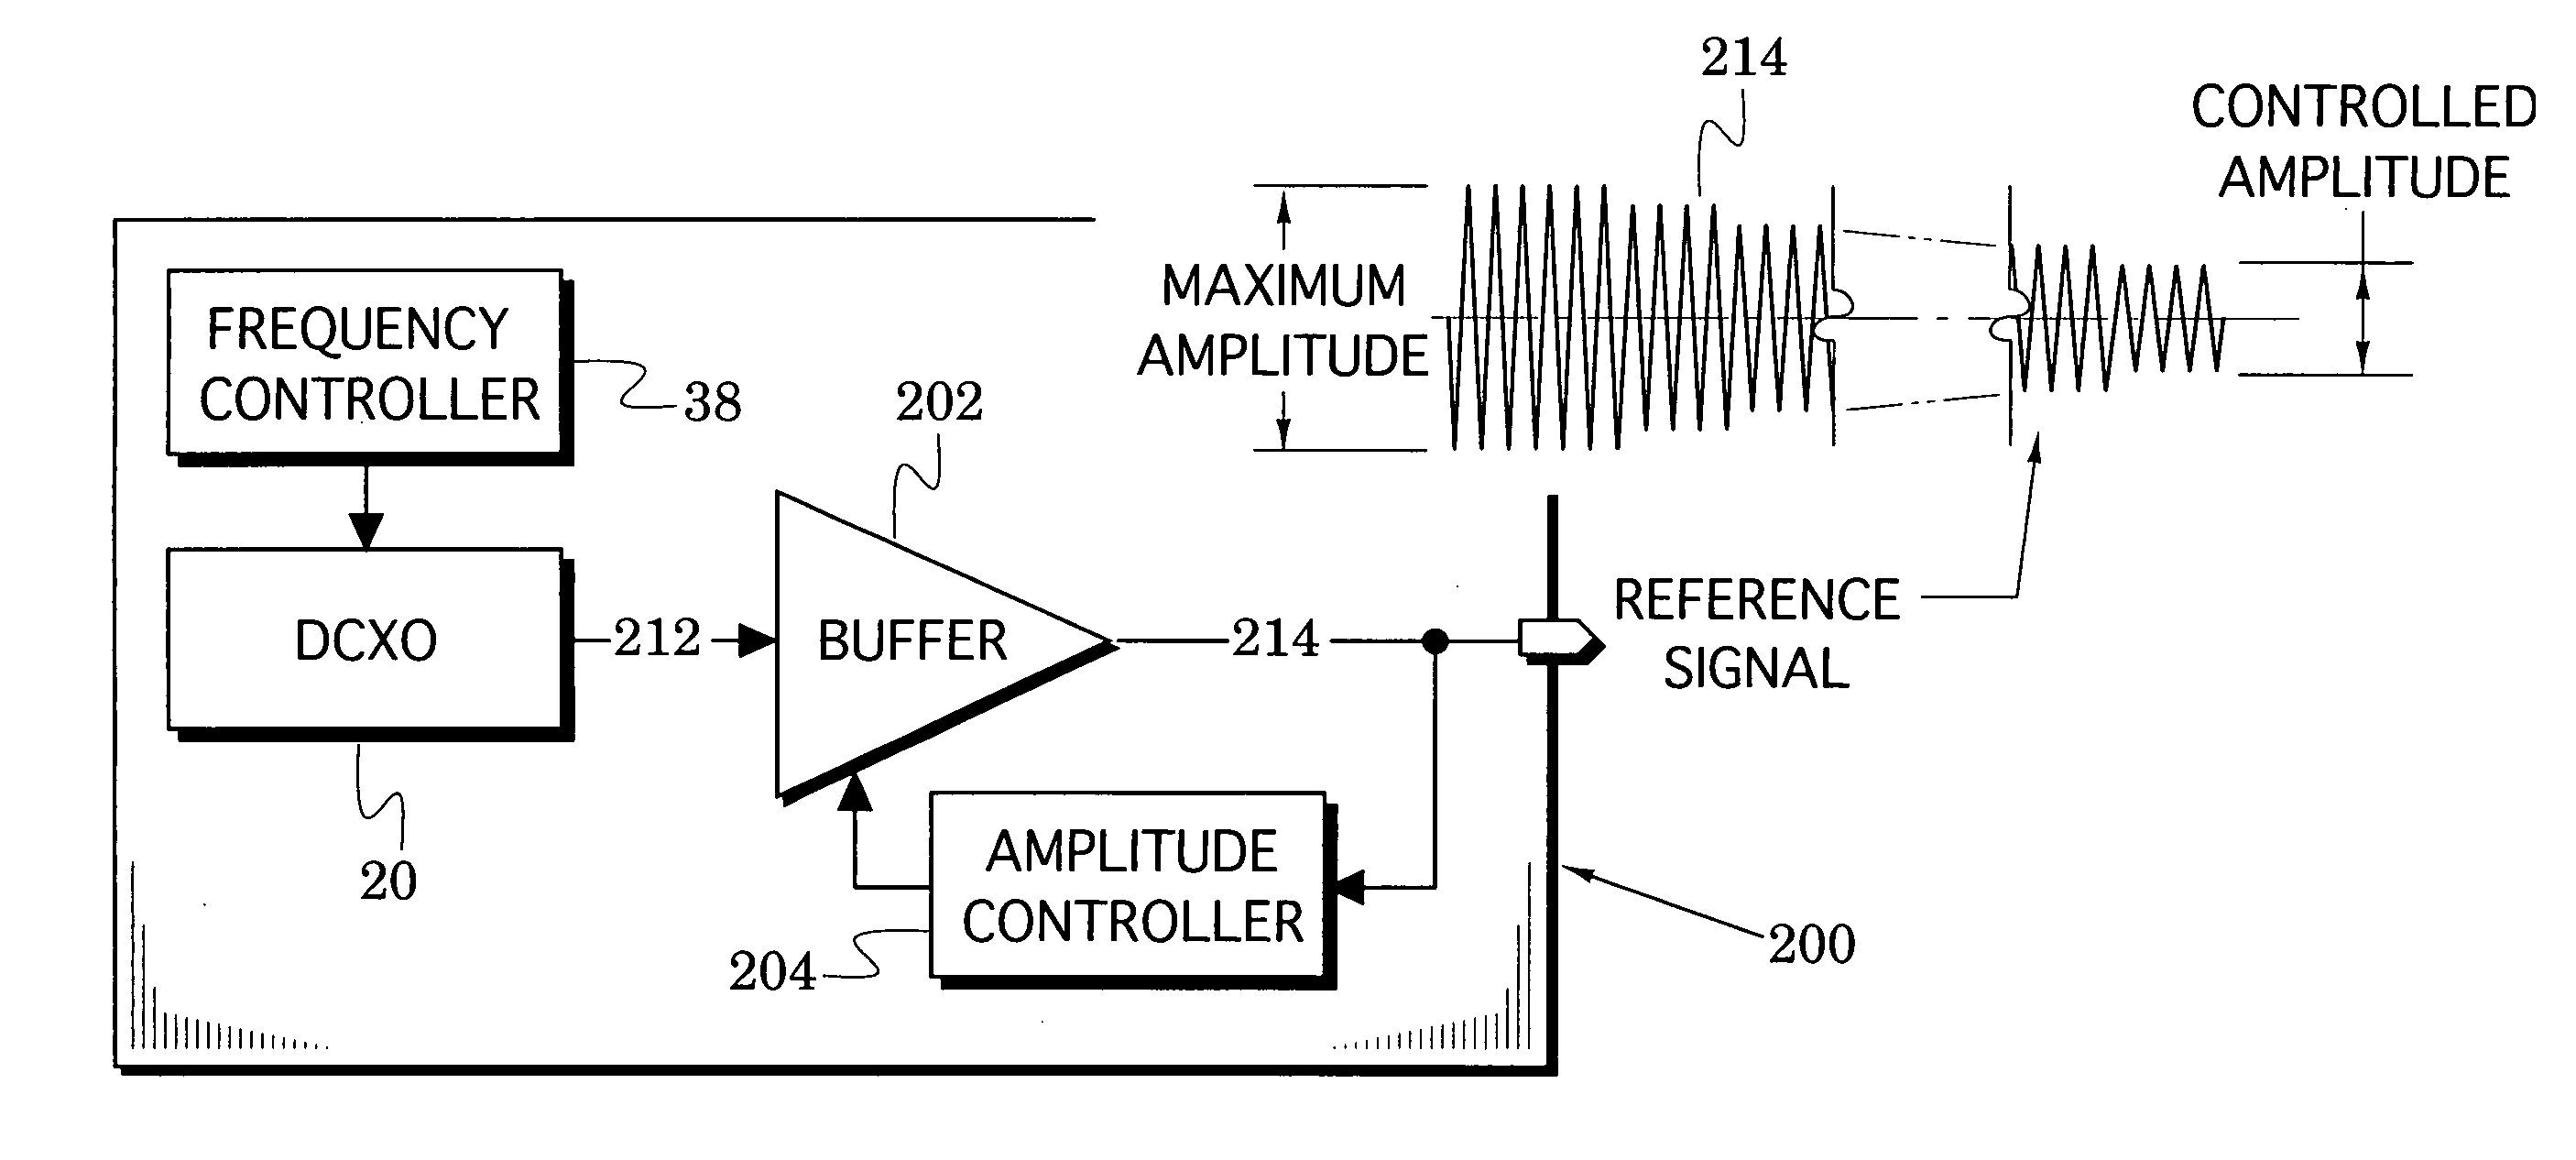 Reference signal generators